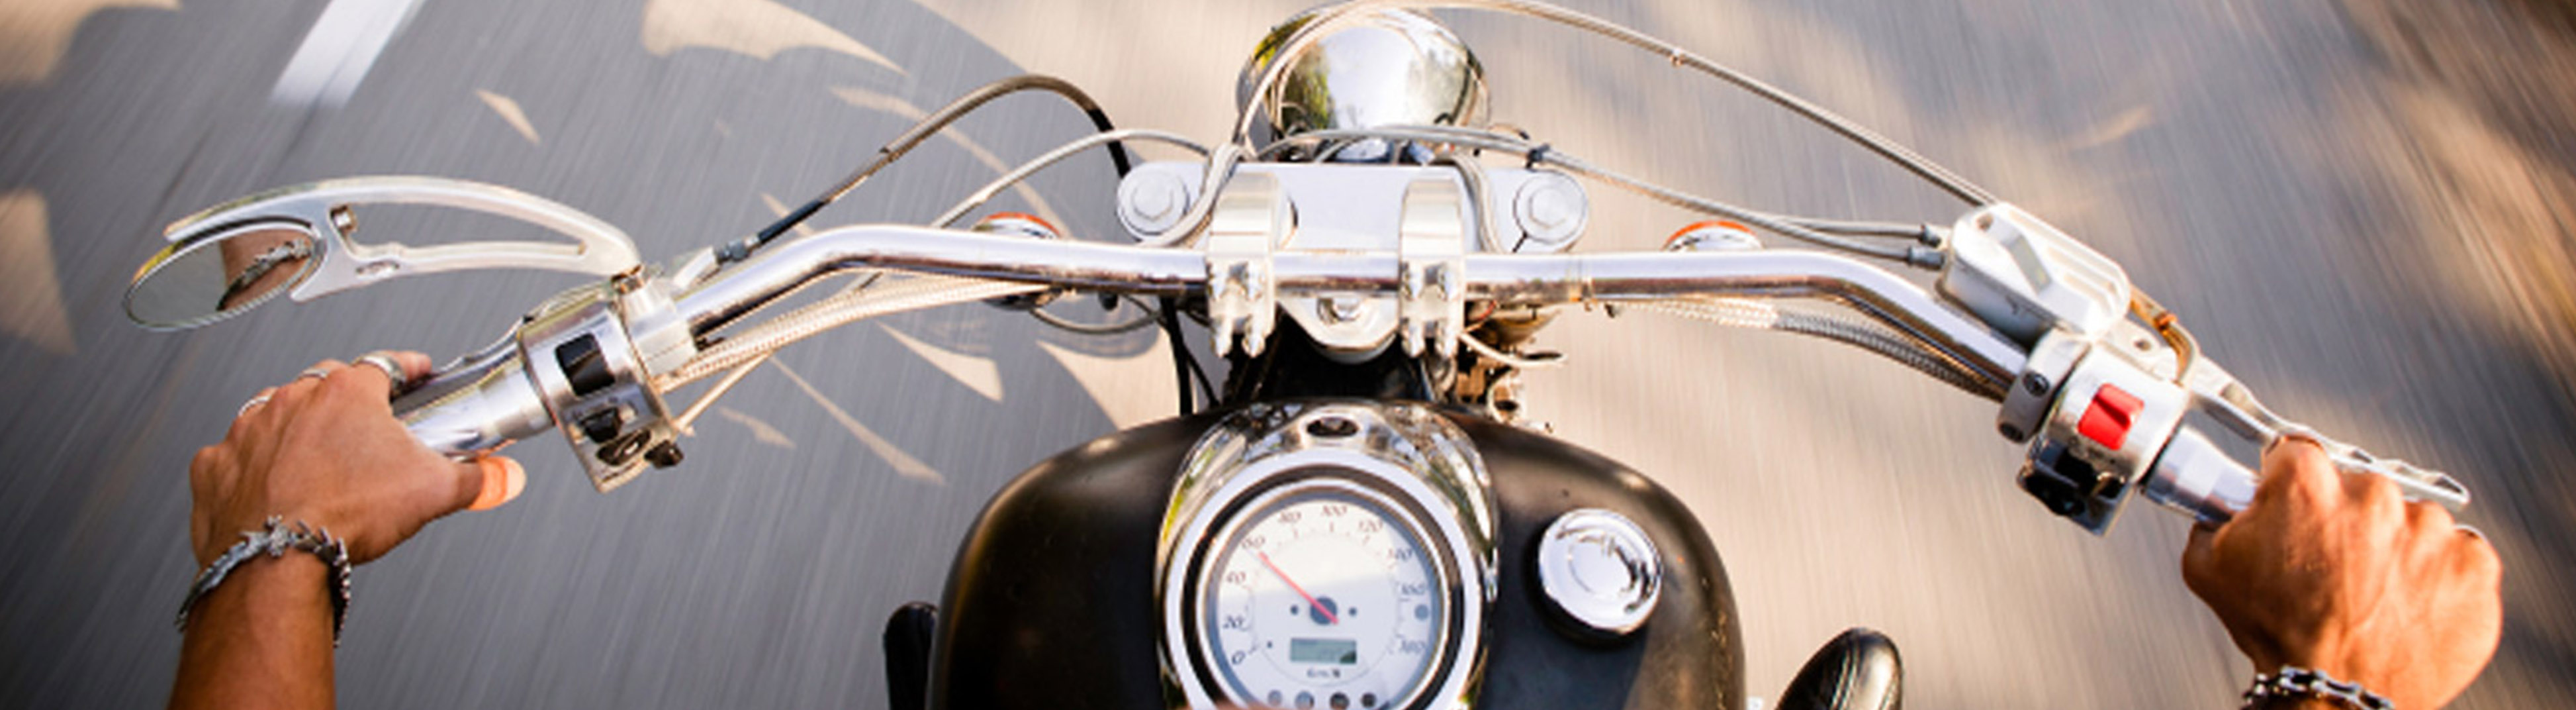 Alabama Motorcycle insurance coverage